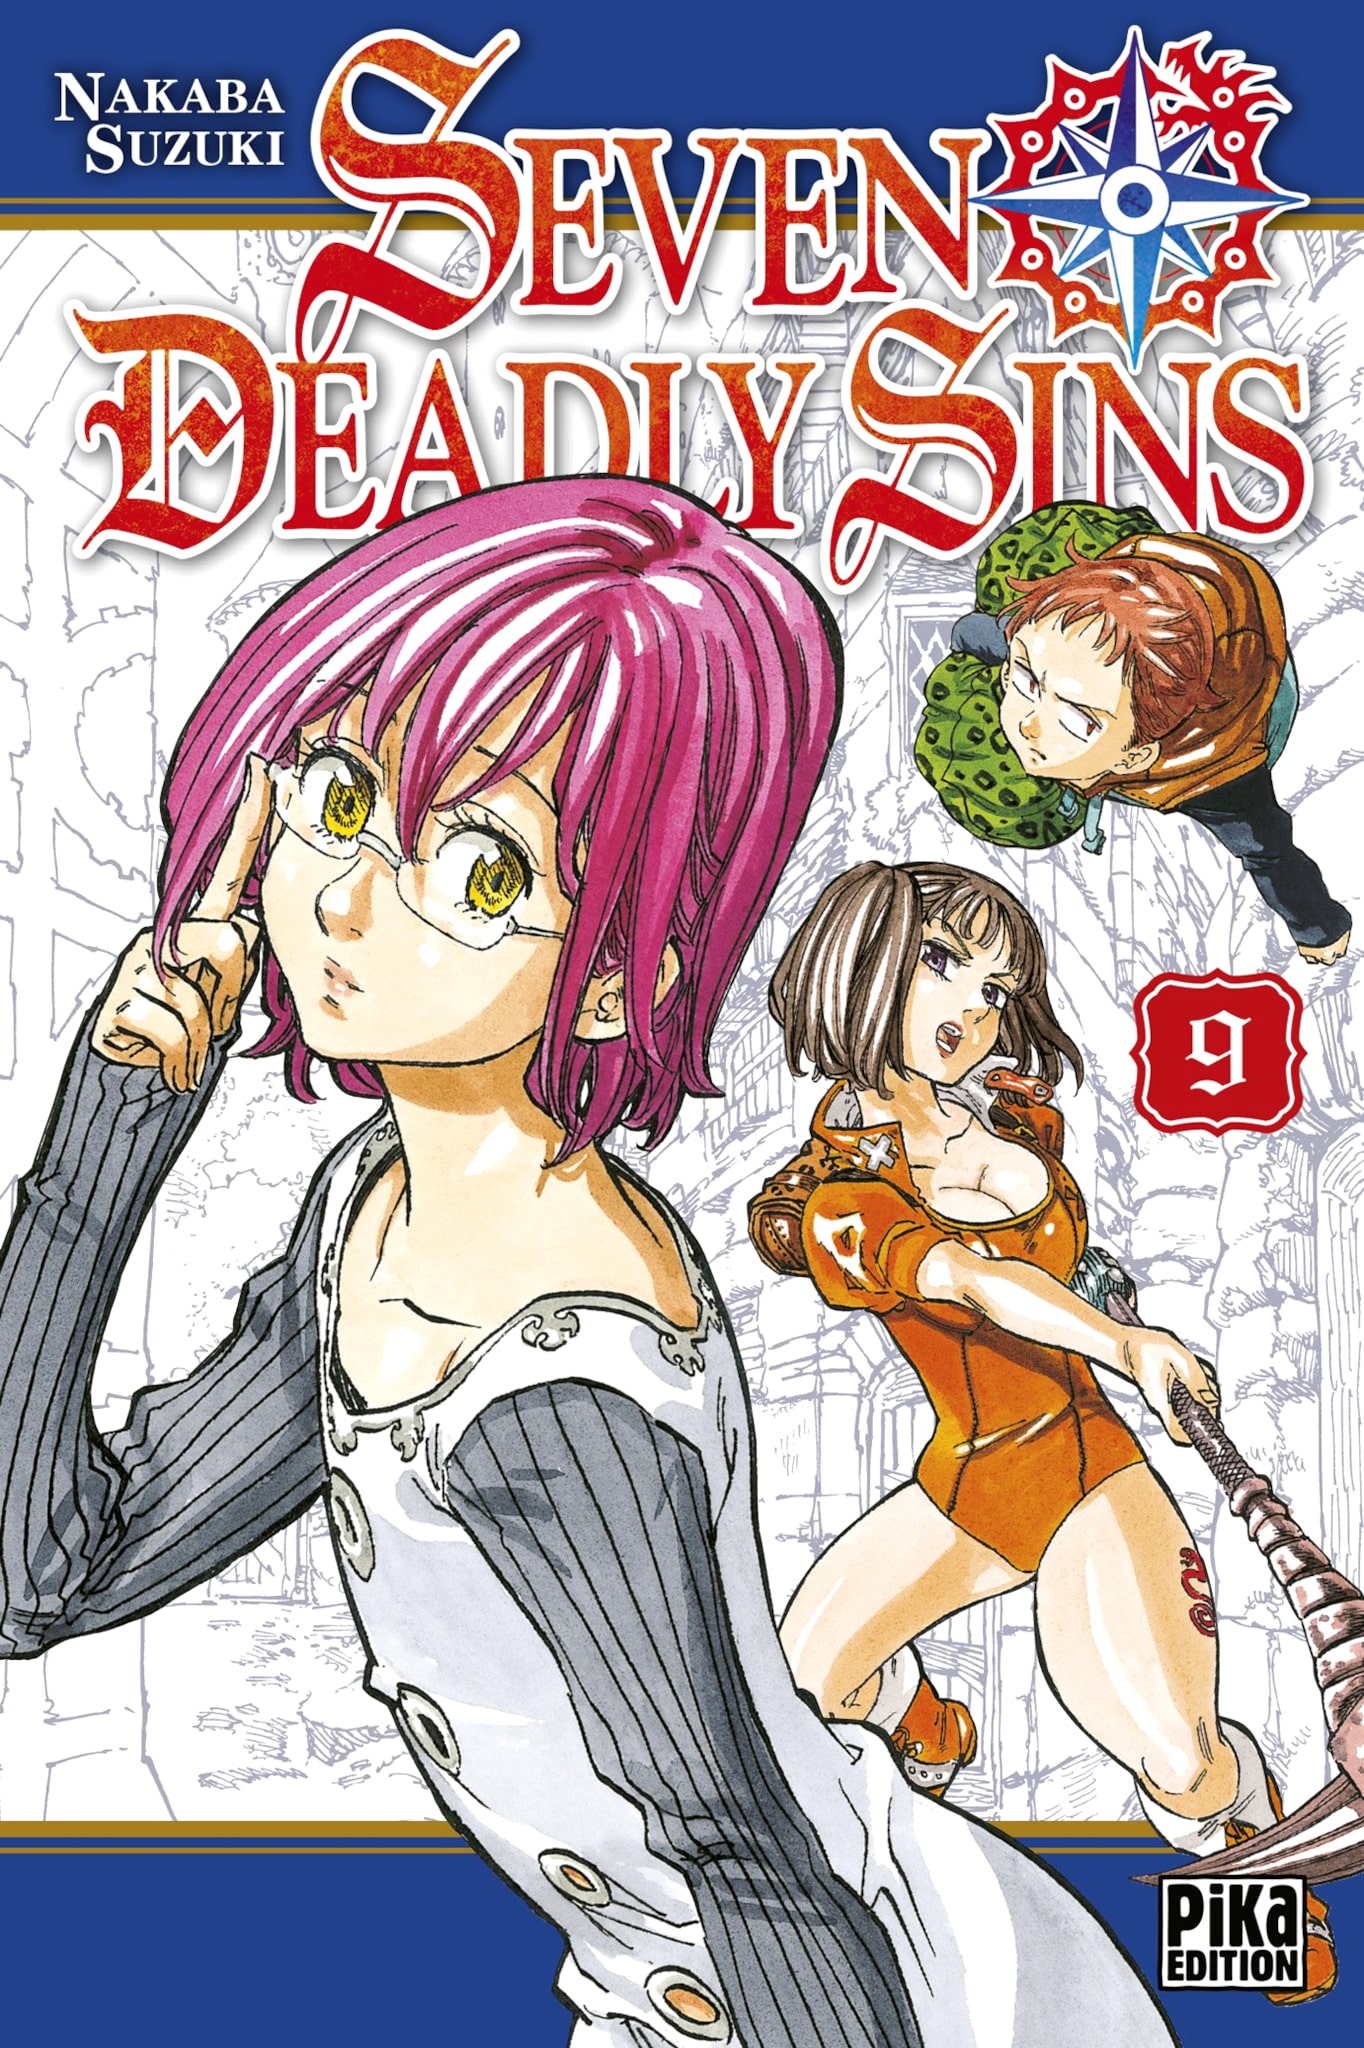 Tome 9 du manga The Seven Deadly Sins